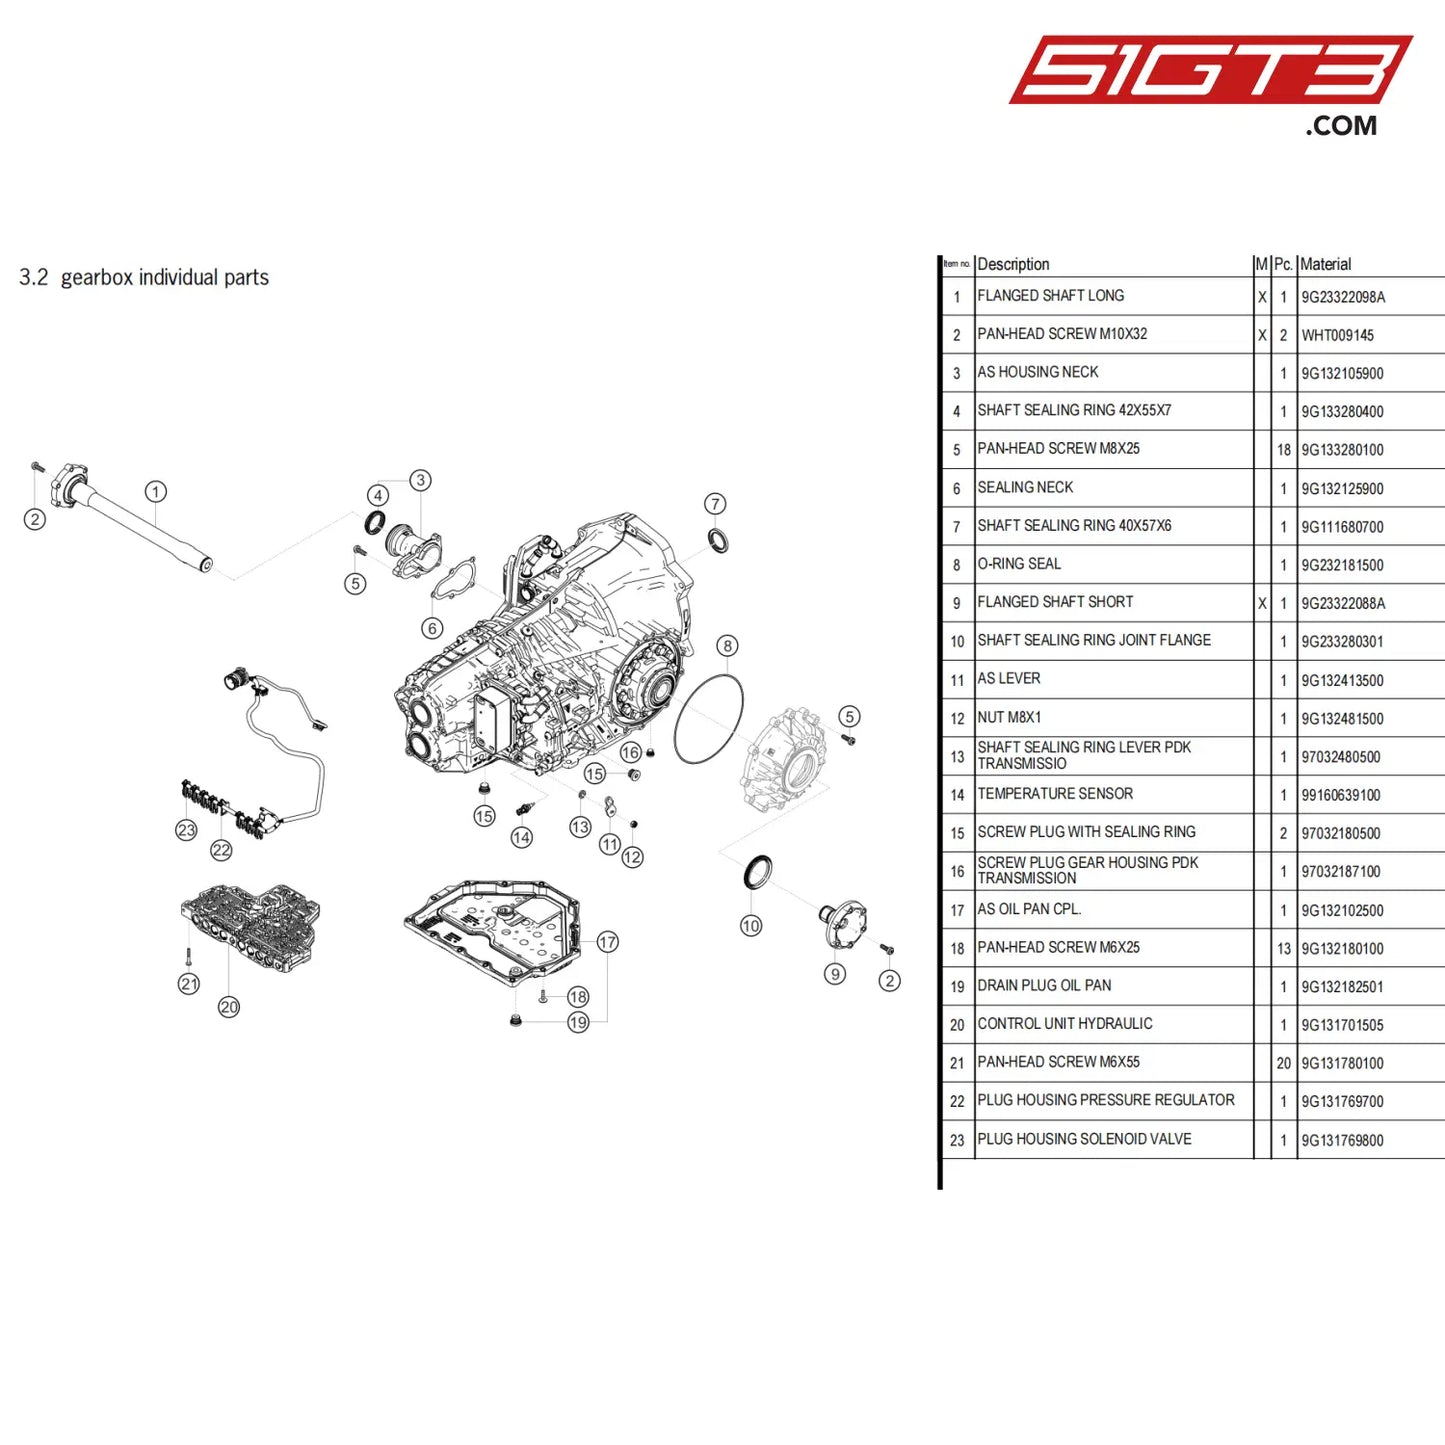 Shaft Sealing Ring Lever Pdk Transmissio - 97032480500 [Porsche 718 Cayman Gt4 Clubsport] Gearbox